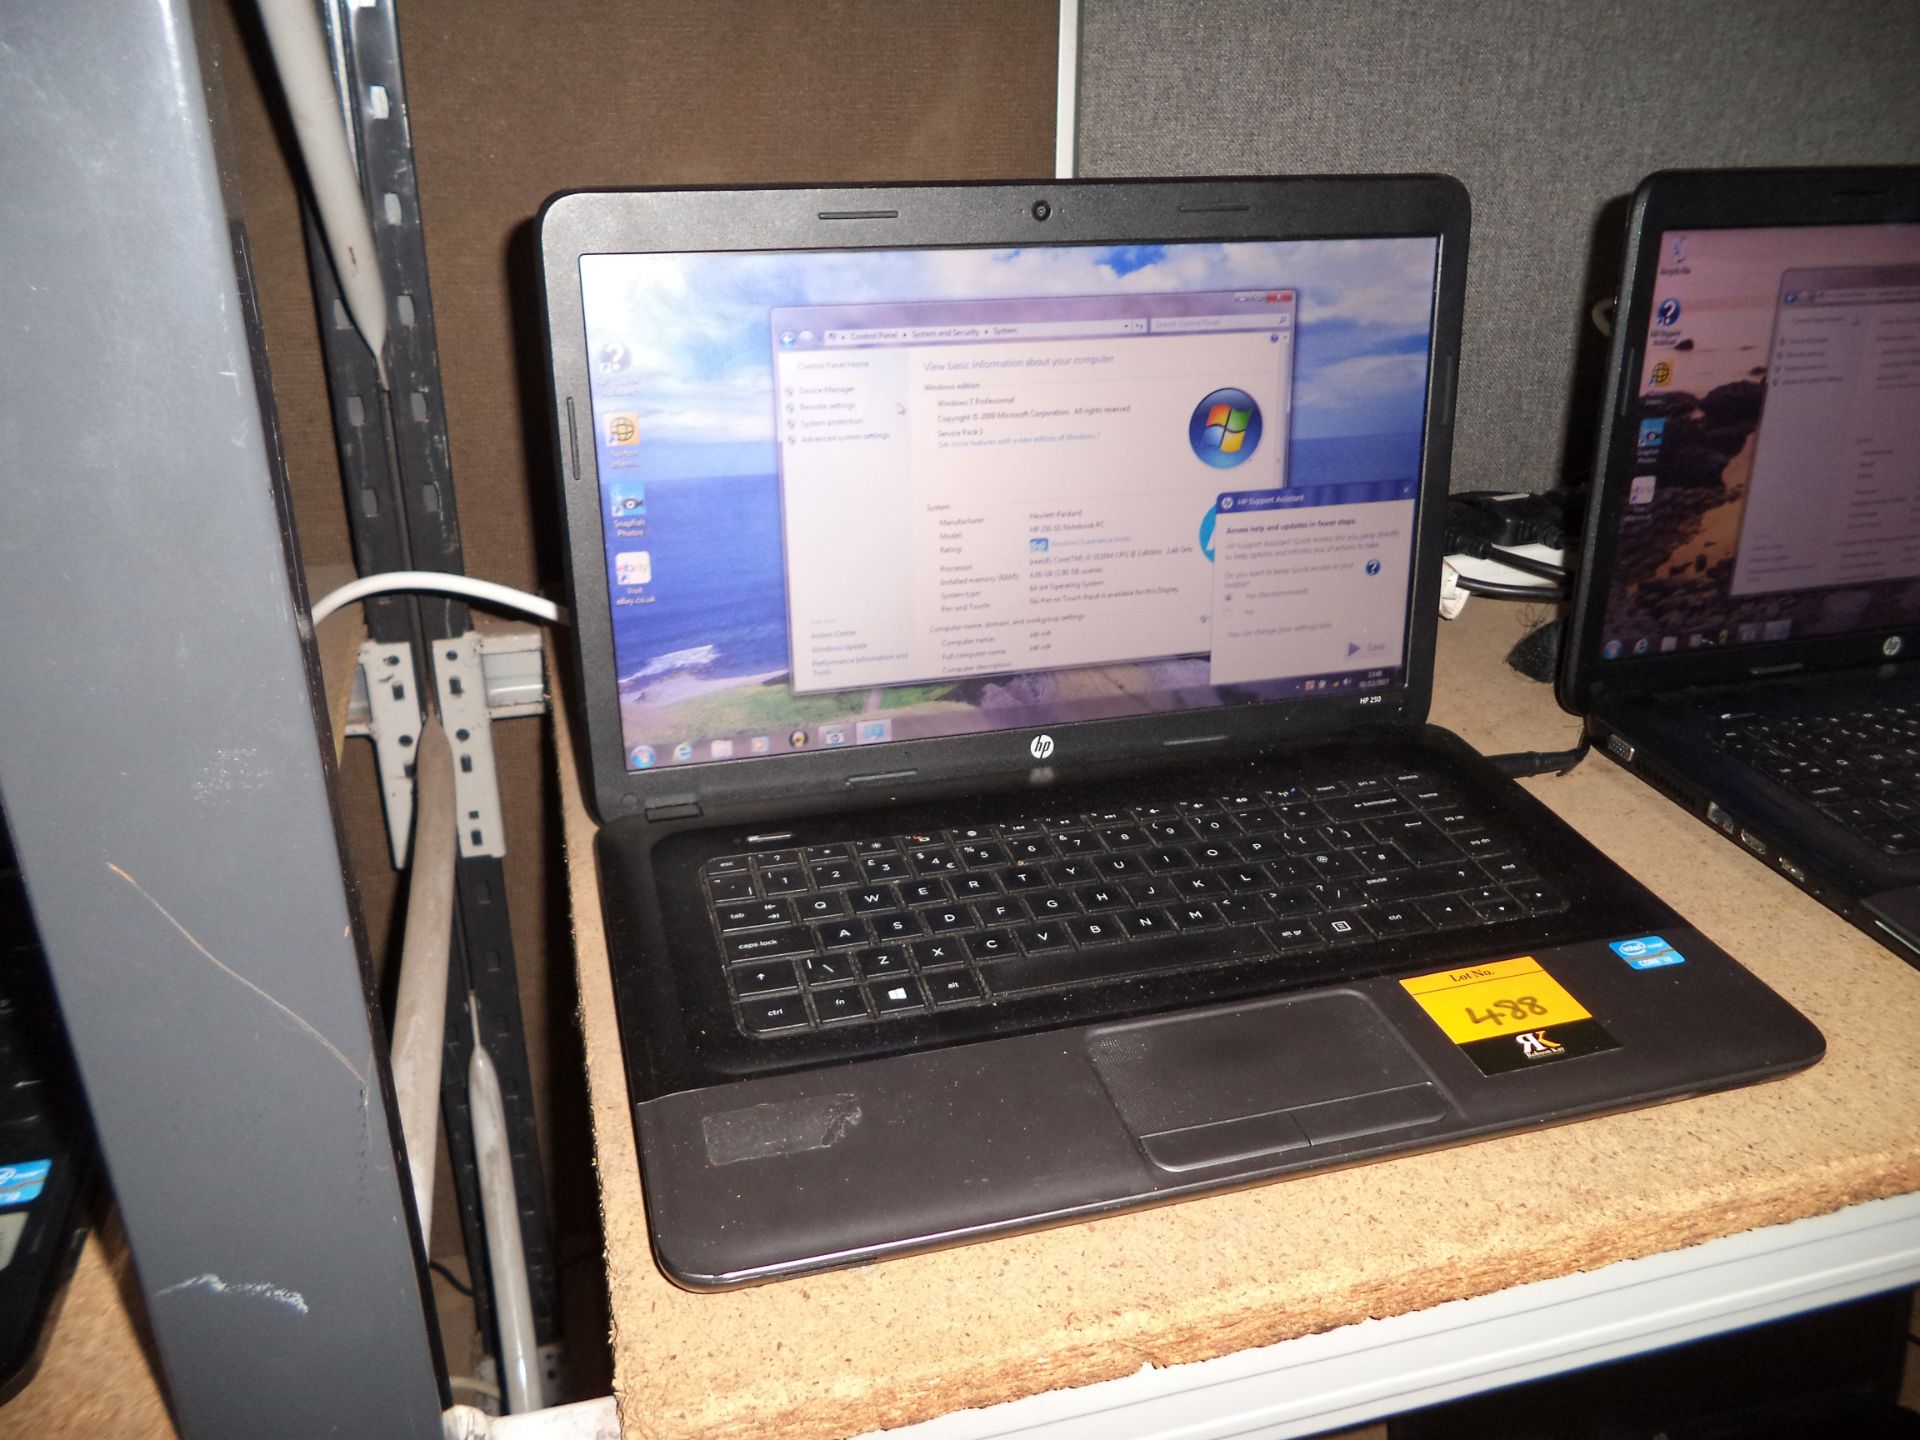 HP ProBook 250 G1 notebook computer with 15.6" widescreen display & built-in webcam plus DVD writer,